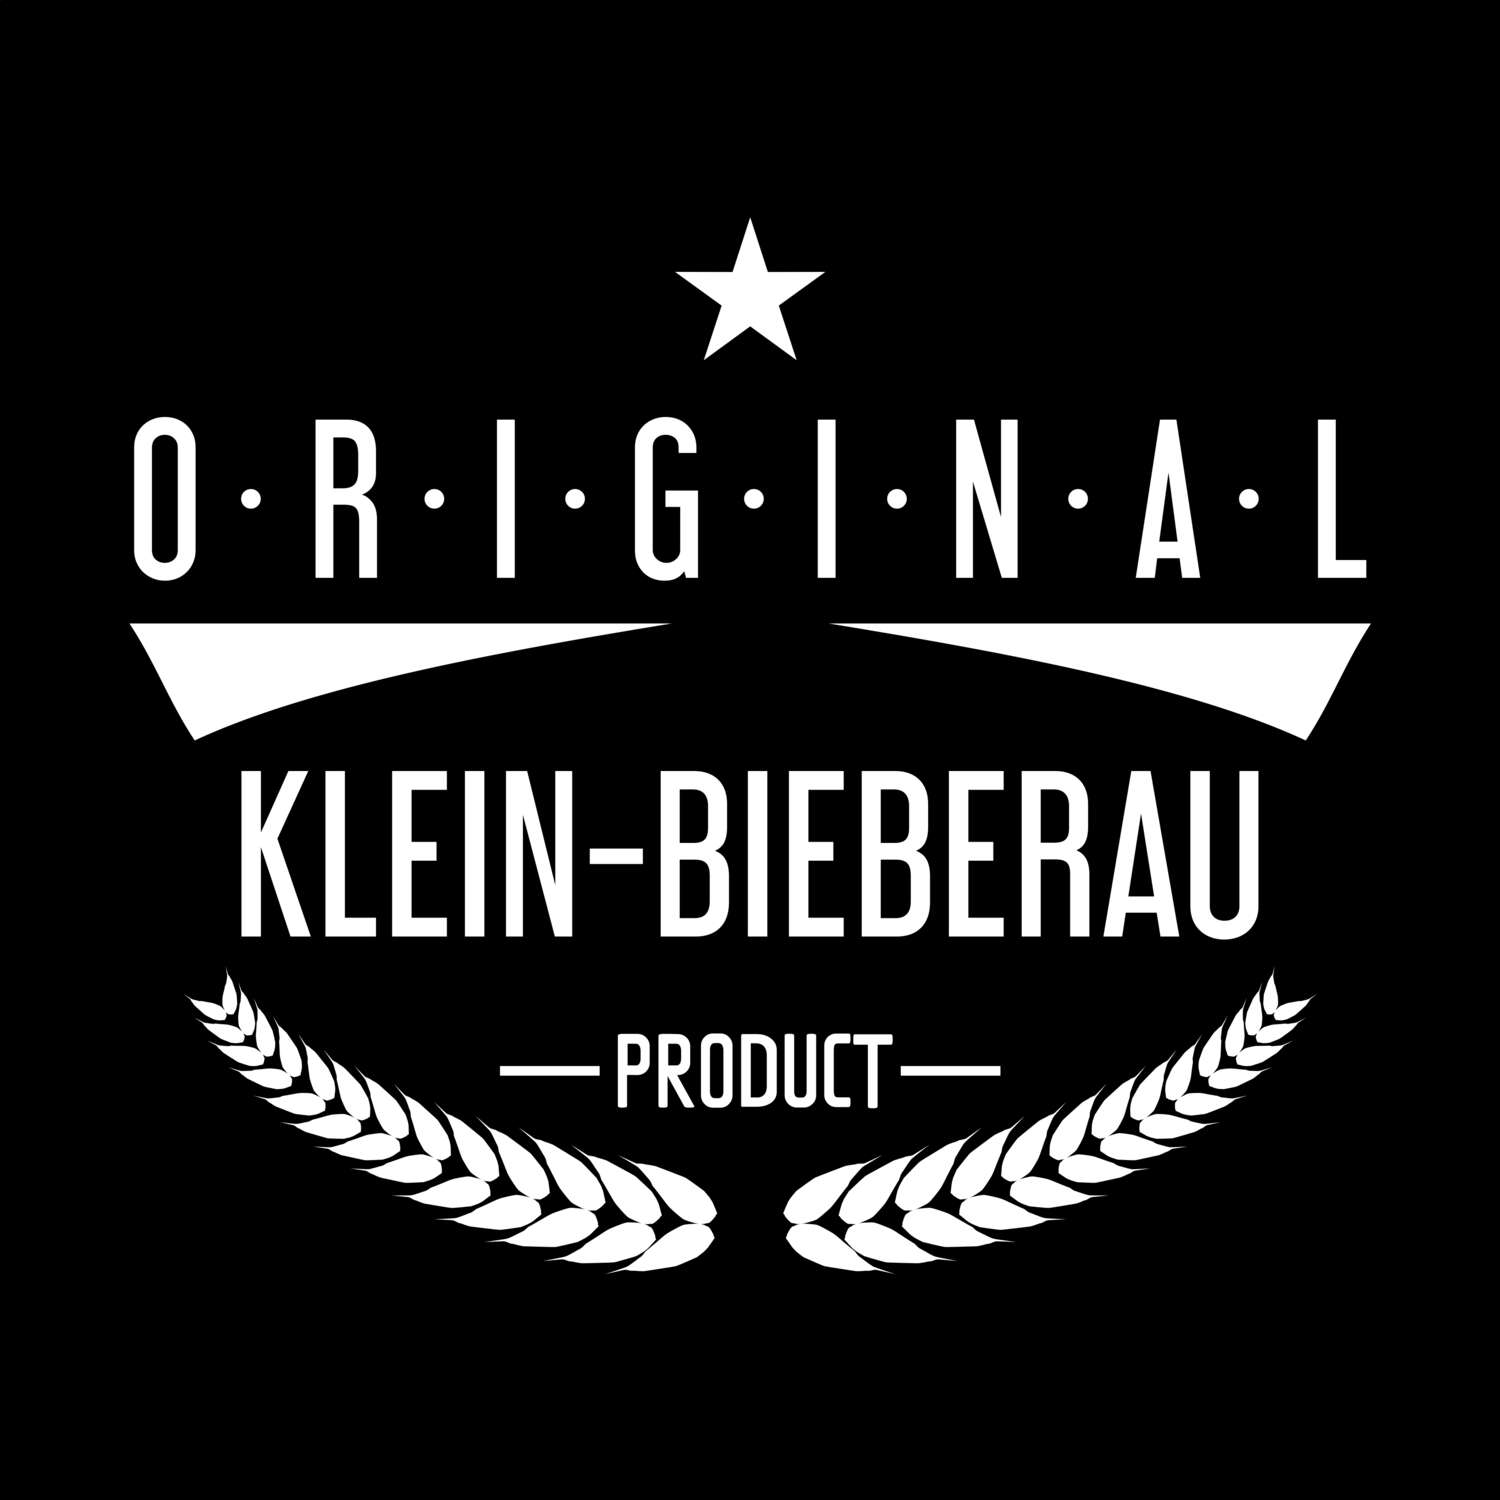 Klein-Bieberau T-Shirt »Original Product«